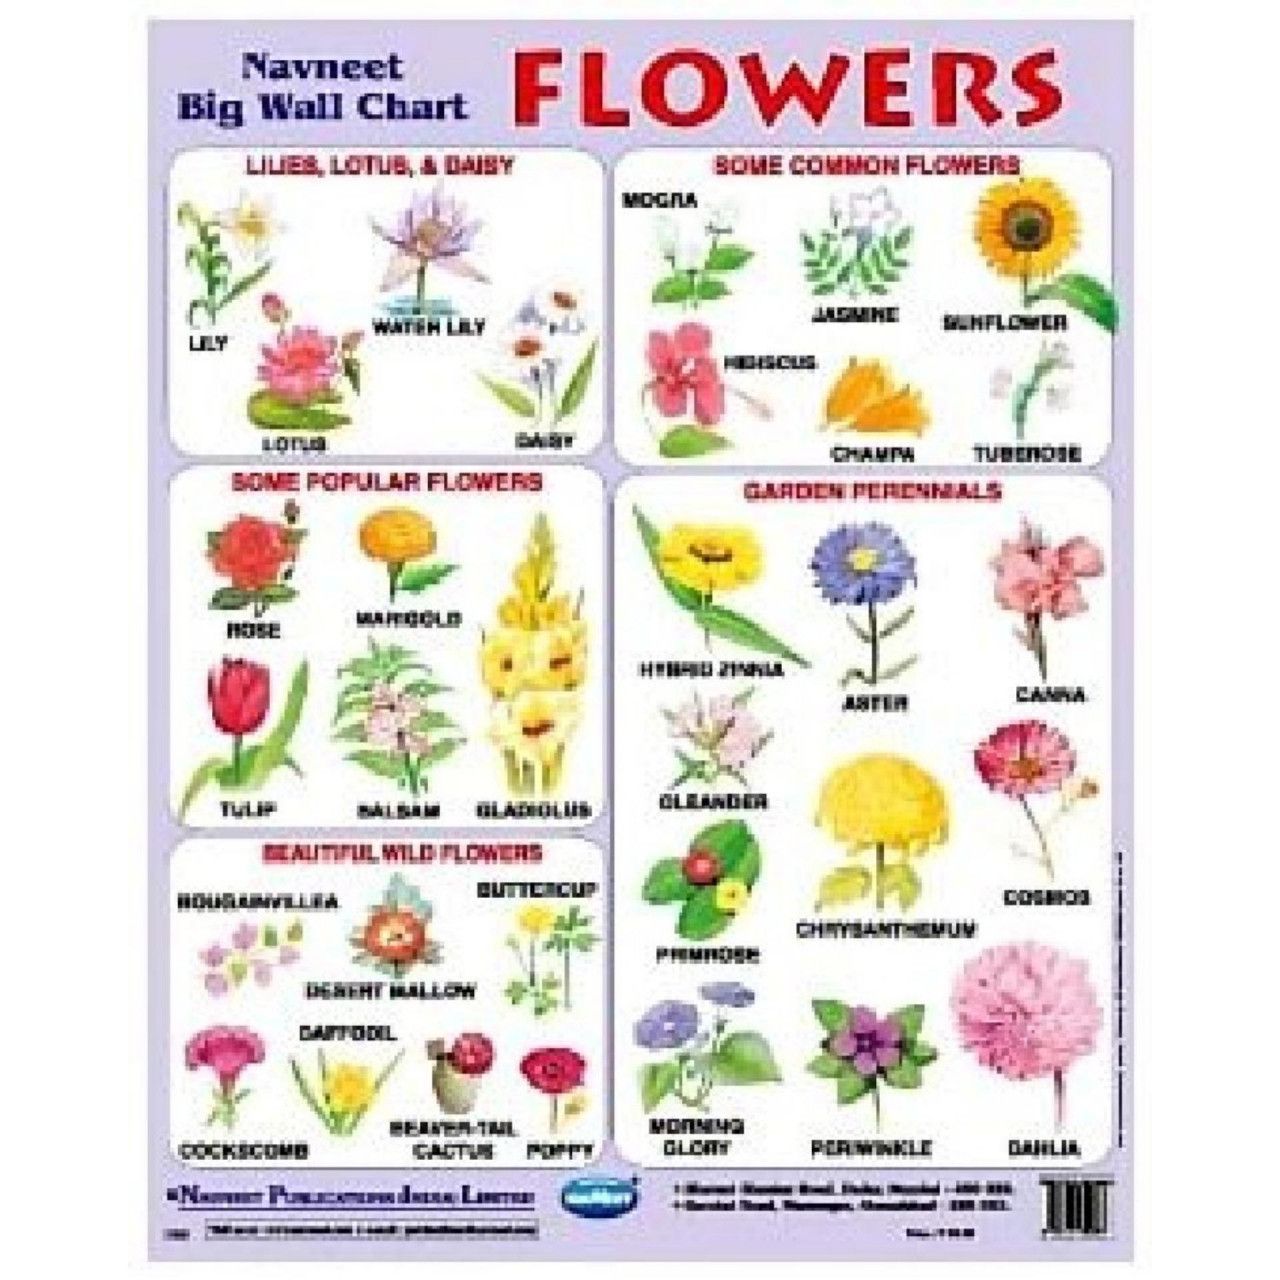 Flower Price Chart